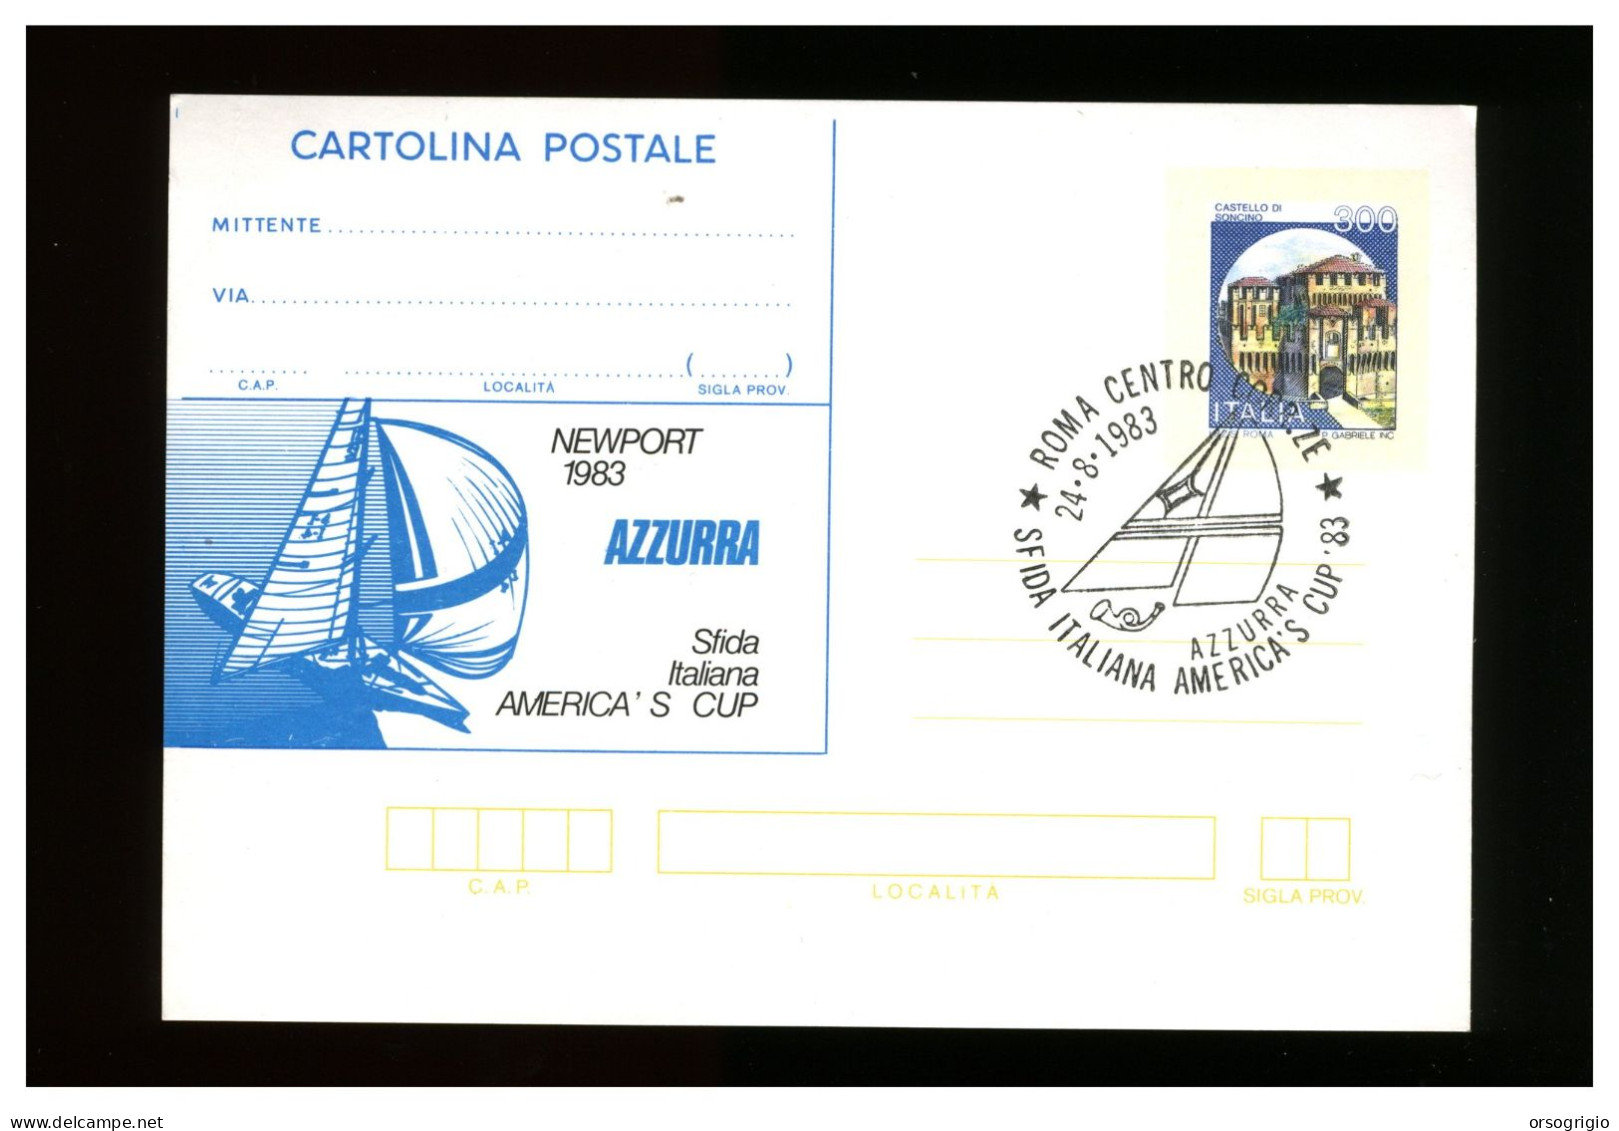 ITALIA - 1983 - AZZURRA - SFIDA ITALIANA AMERICA'S CUP - Vela